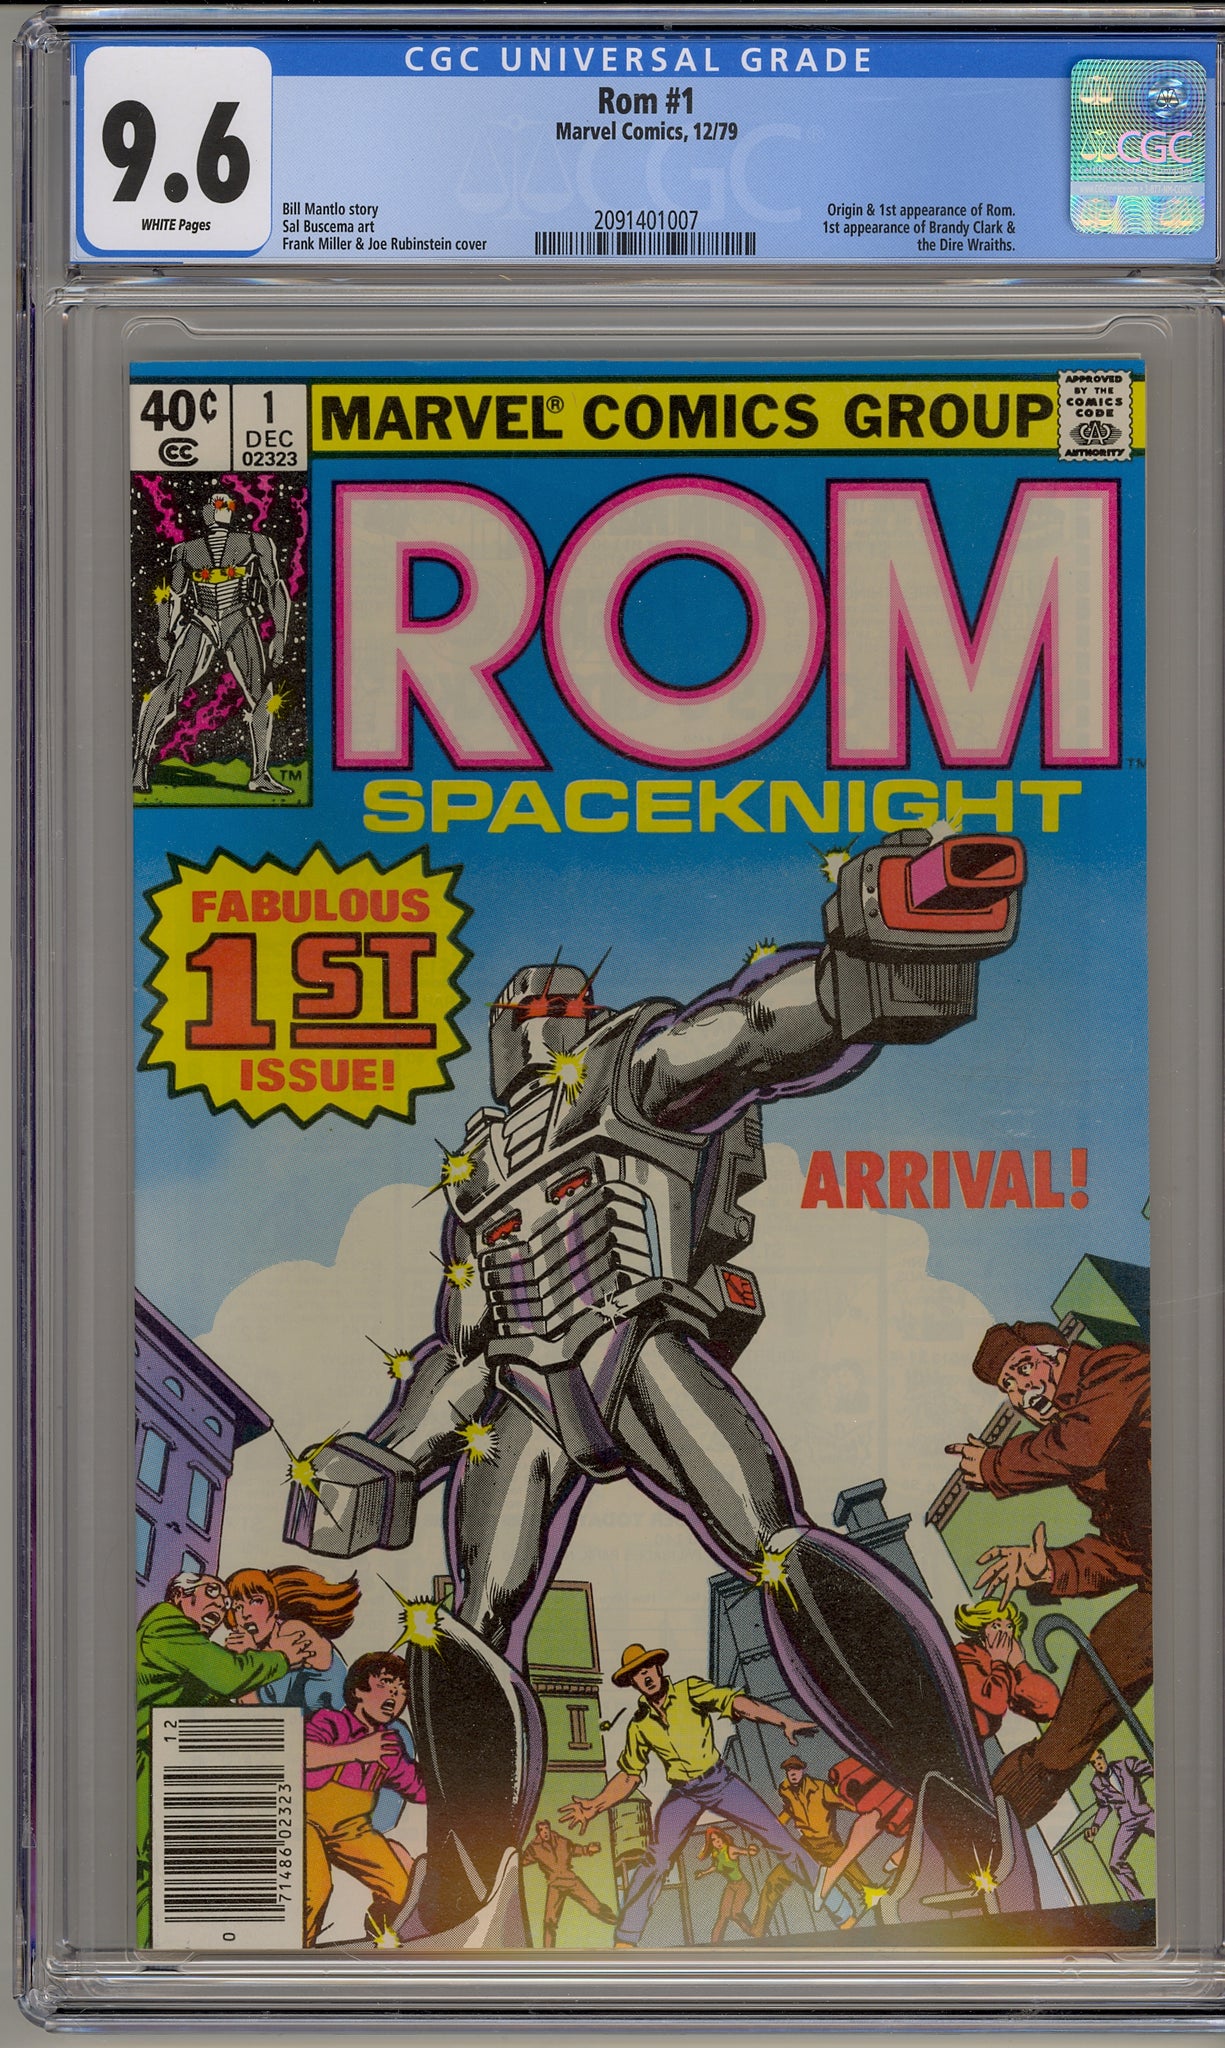 ROM, Spaceknight #1 (1979)